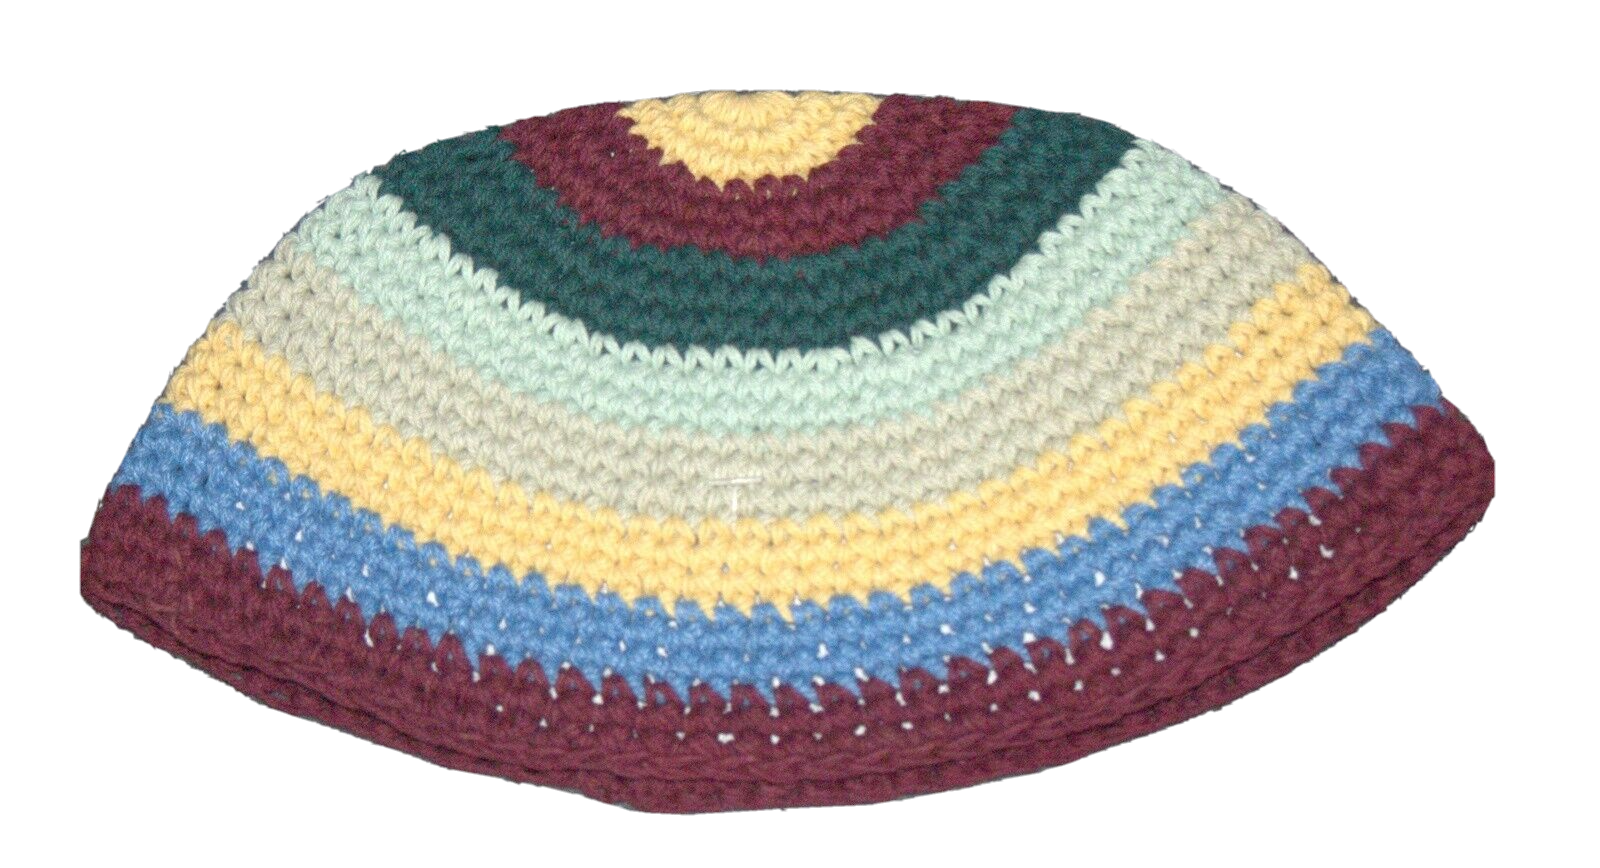 Frik Kippah Yarmulke Yamaka Crochet Colorful 100% Cotton Striped Israel 22 cm